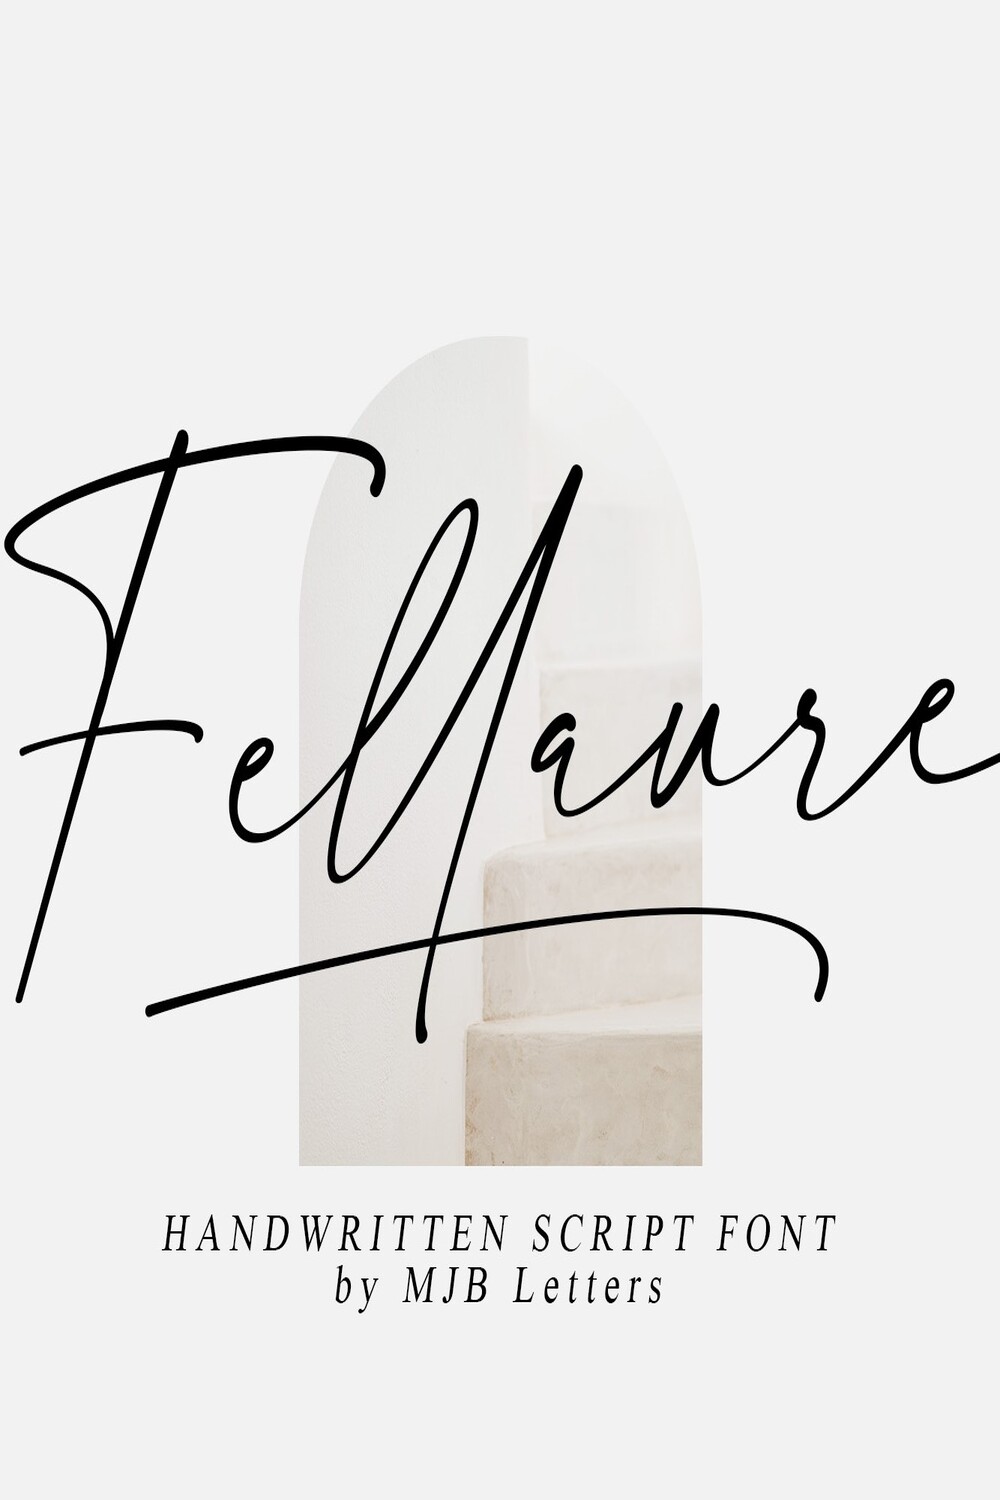 Modern Script Font Fellaure pinterest image.